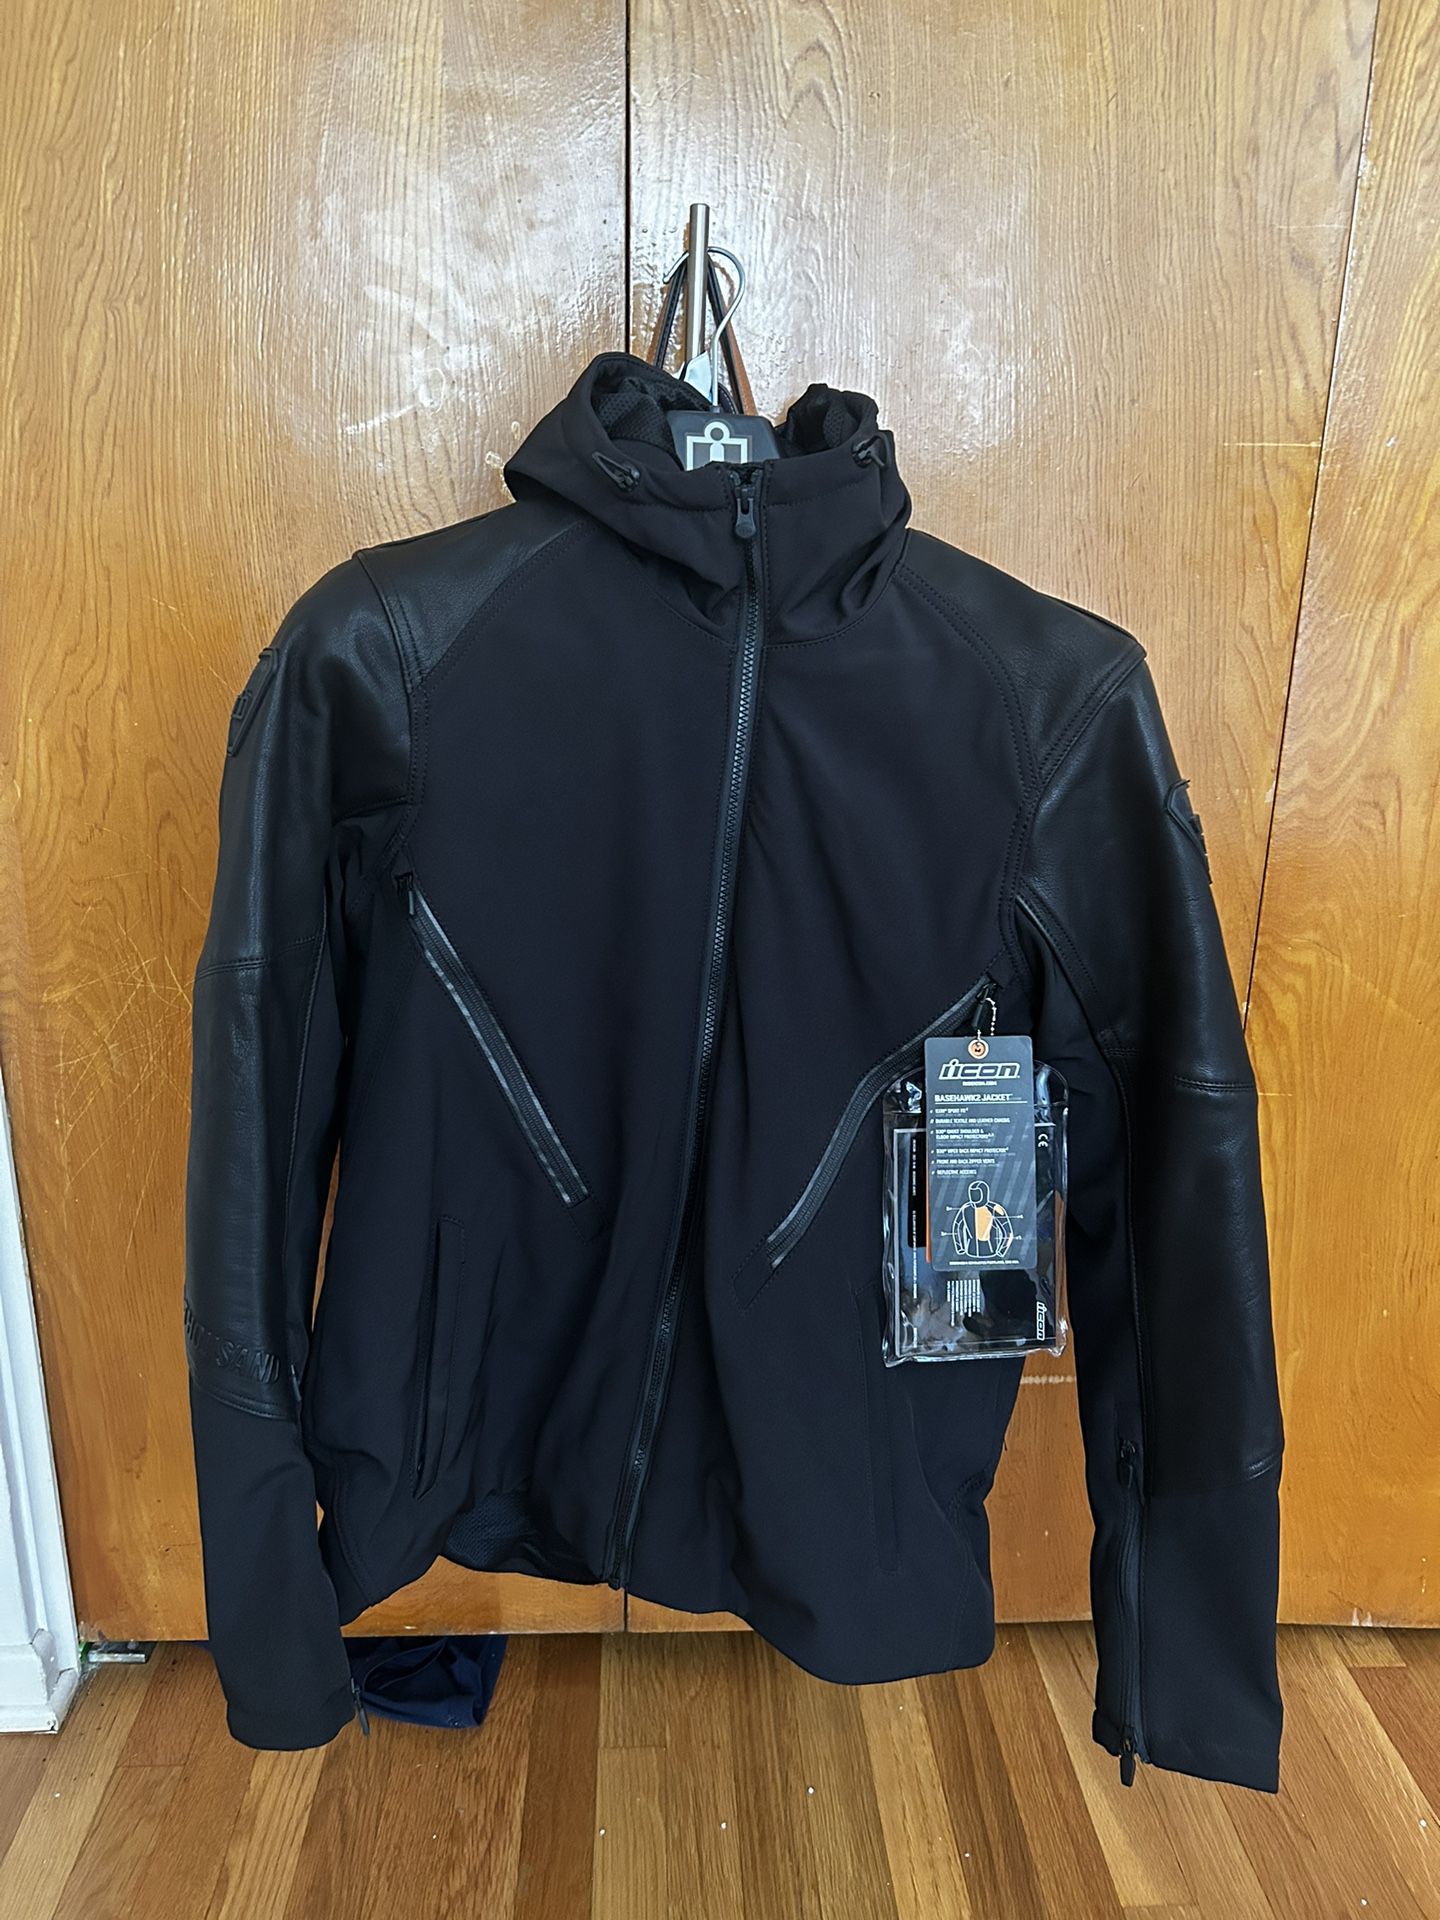 ICON Half Leather Half Nylon-ish Motorcycle jacket